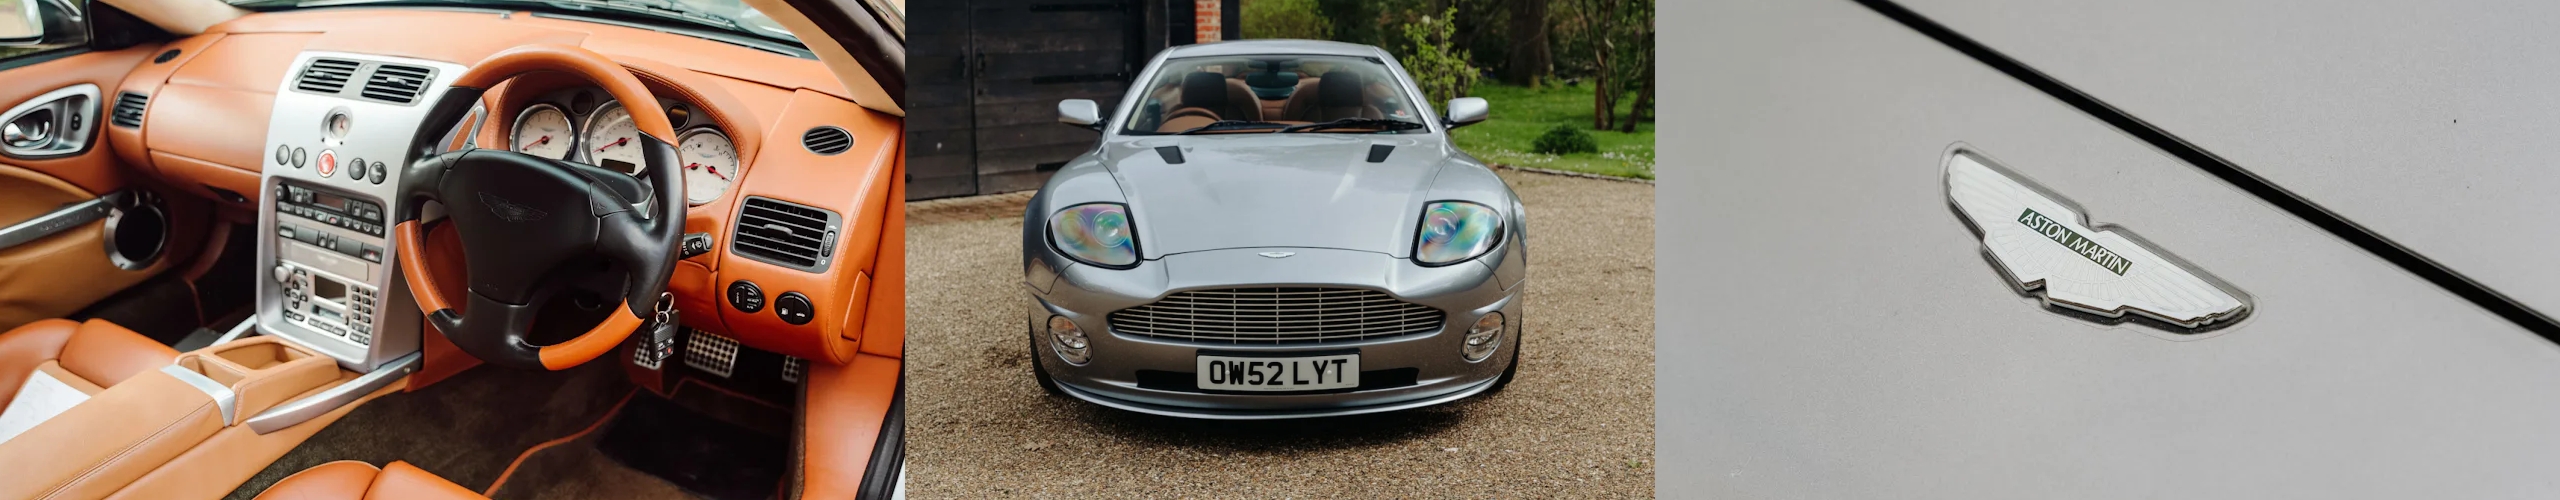 007’s Choice: 2003 Aston Martin Vanquish - A Bond Bargain Comes to Auction